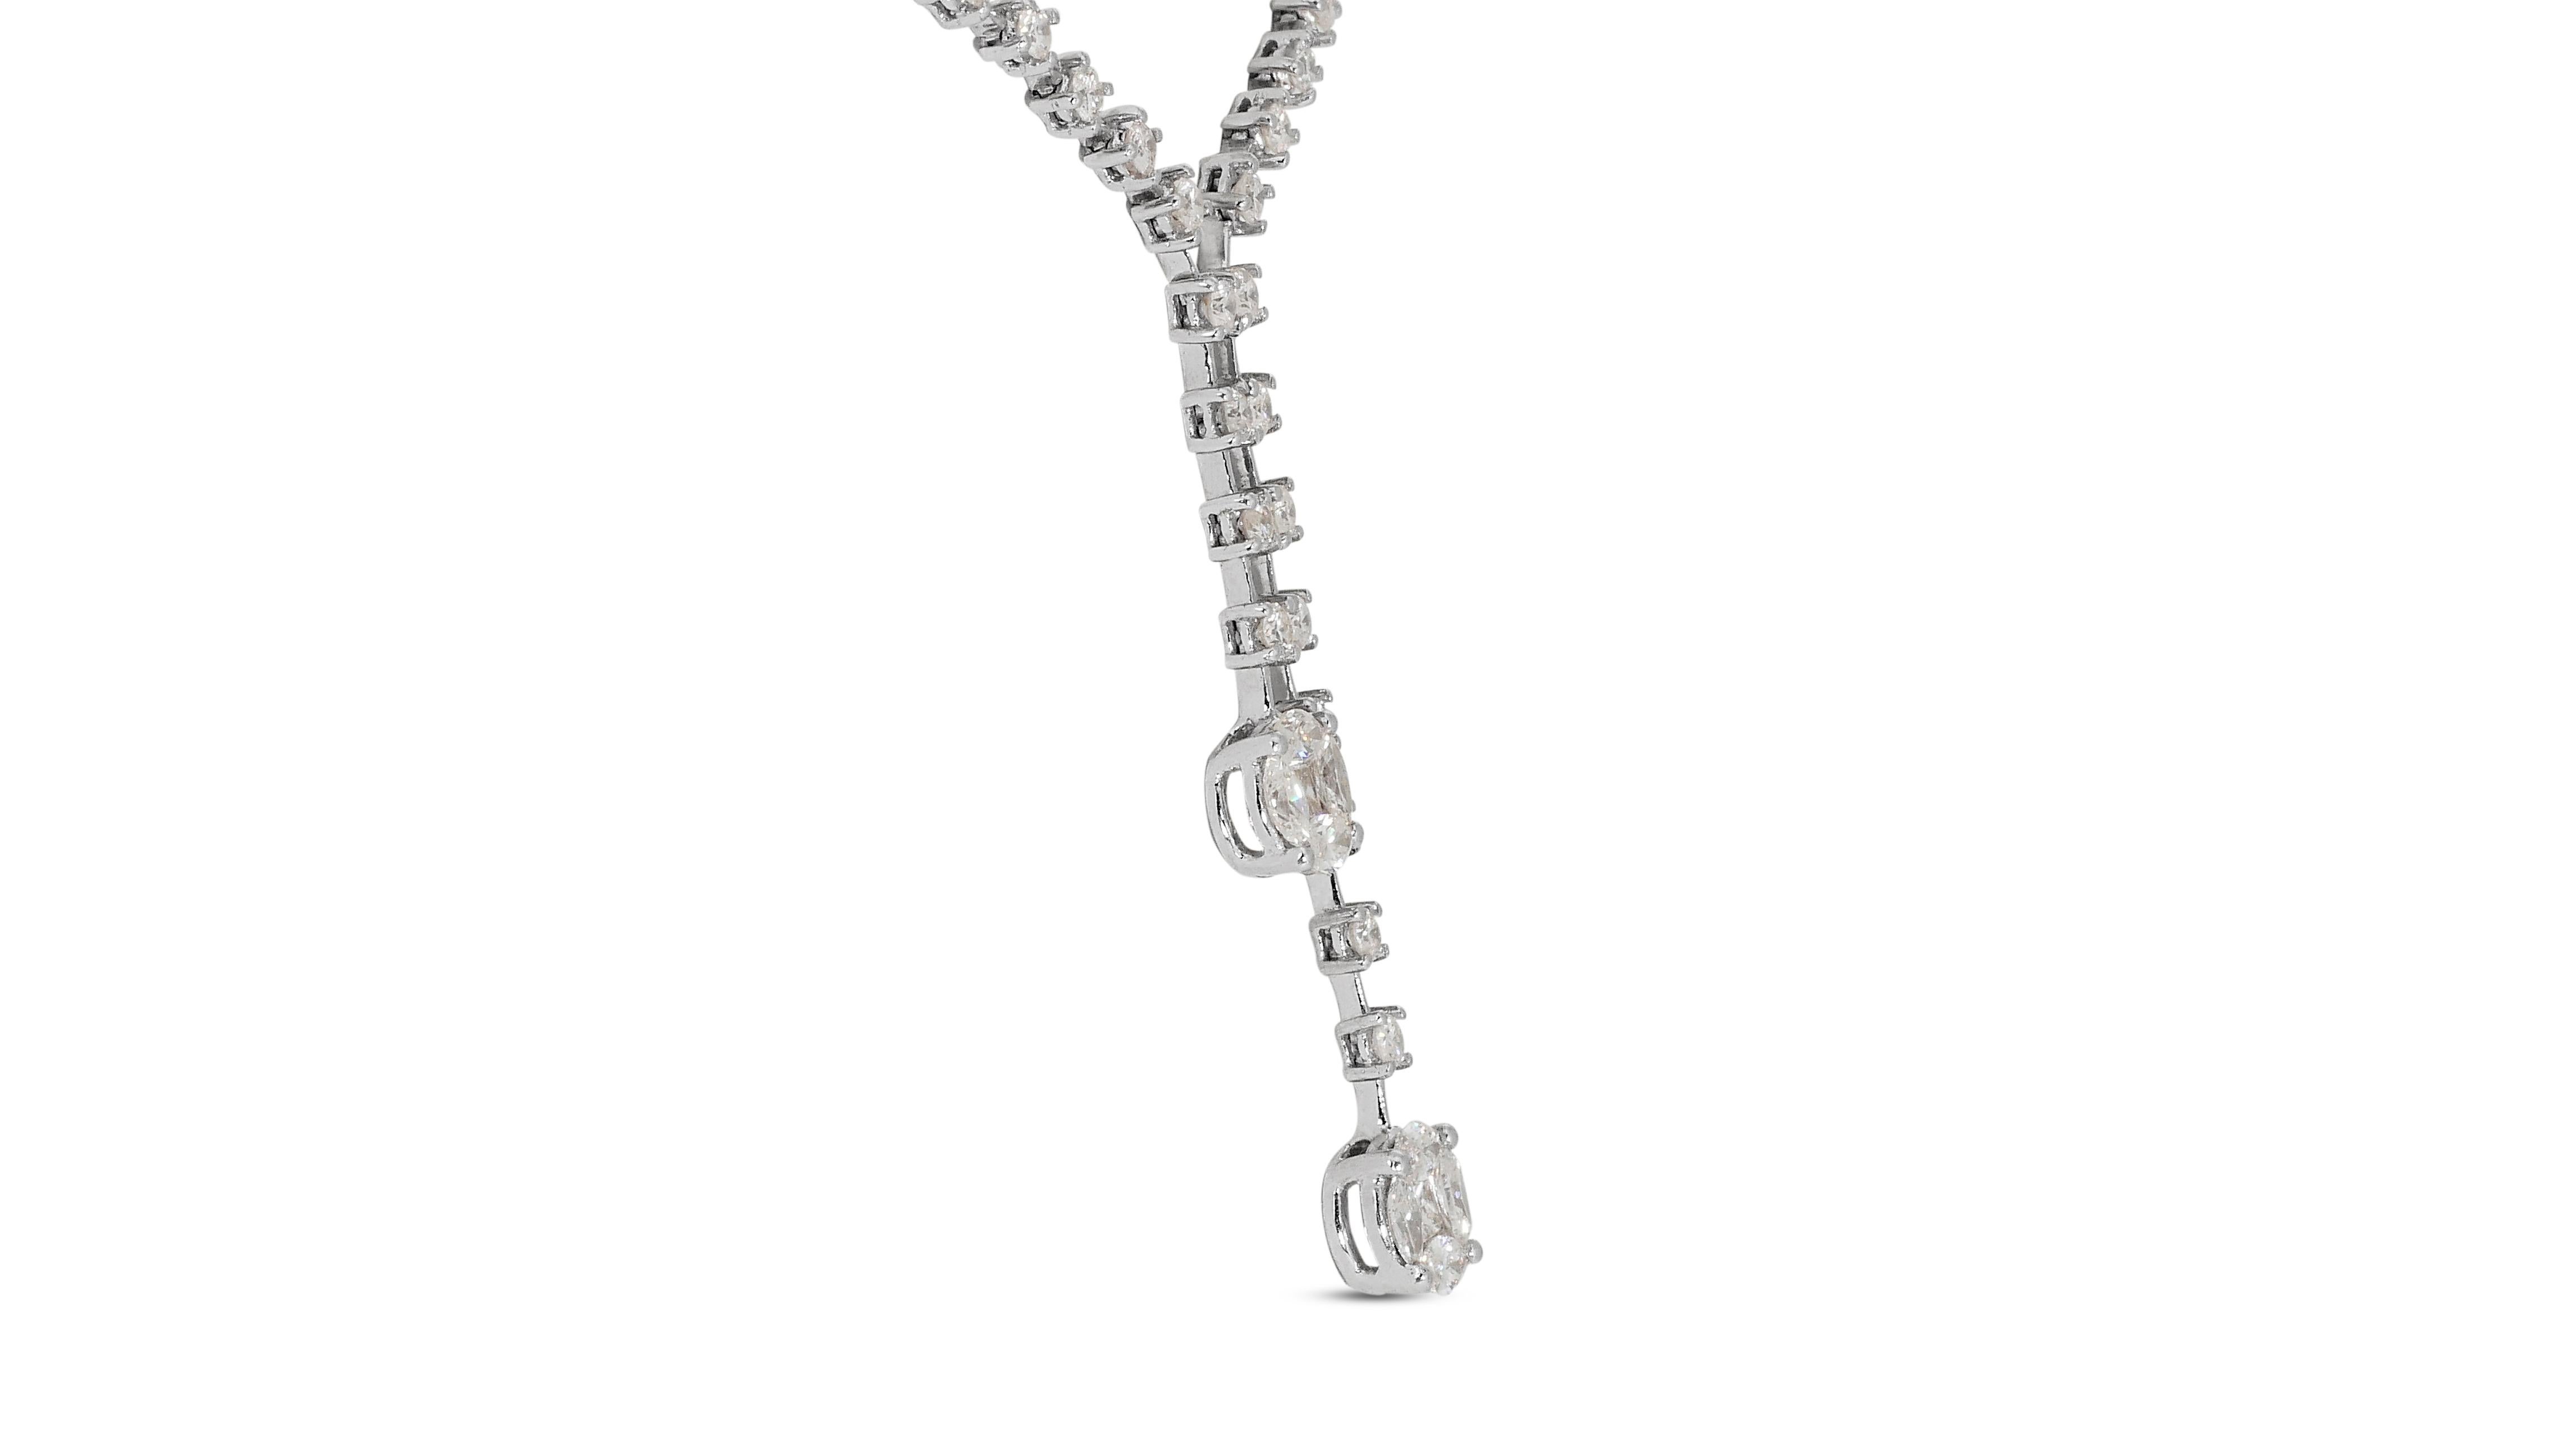 Glamorous 18k White Gold Drop Necklace w/ 5.06ct Natural Diamonds IGI Cert For Sale 2